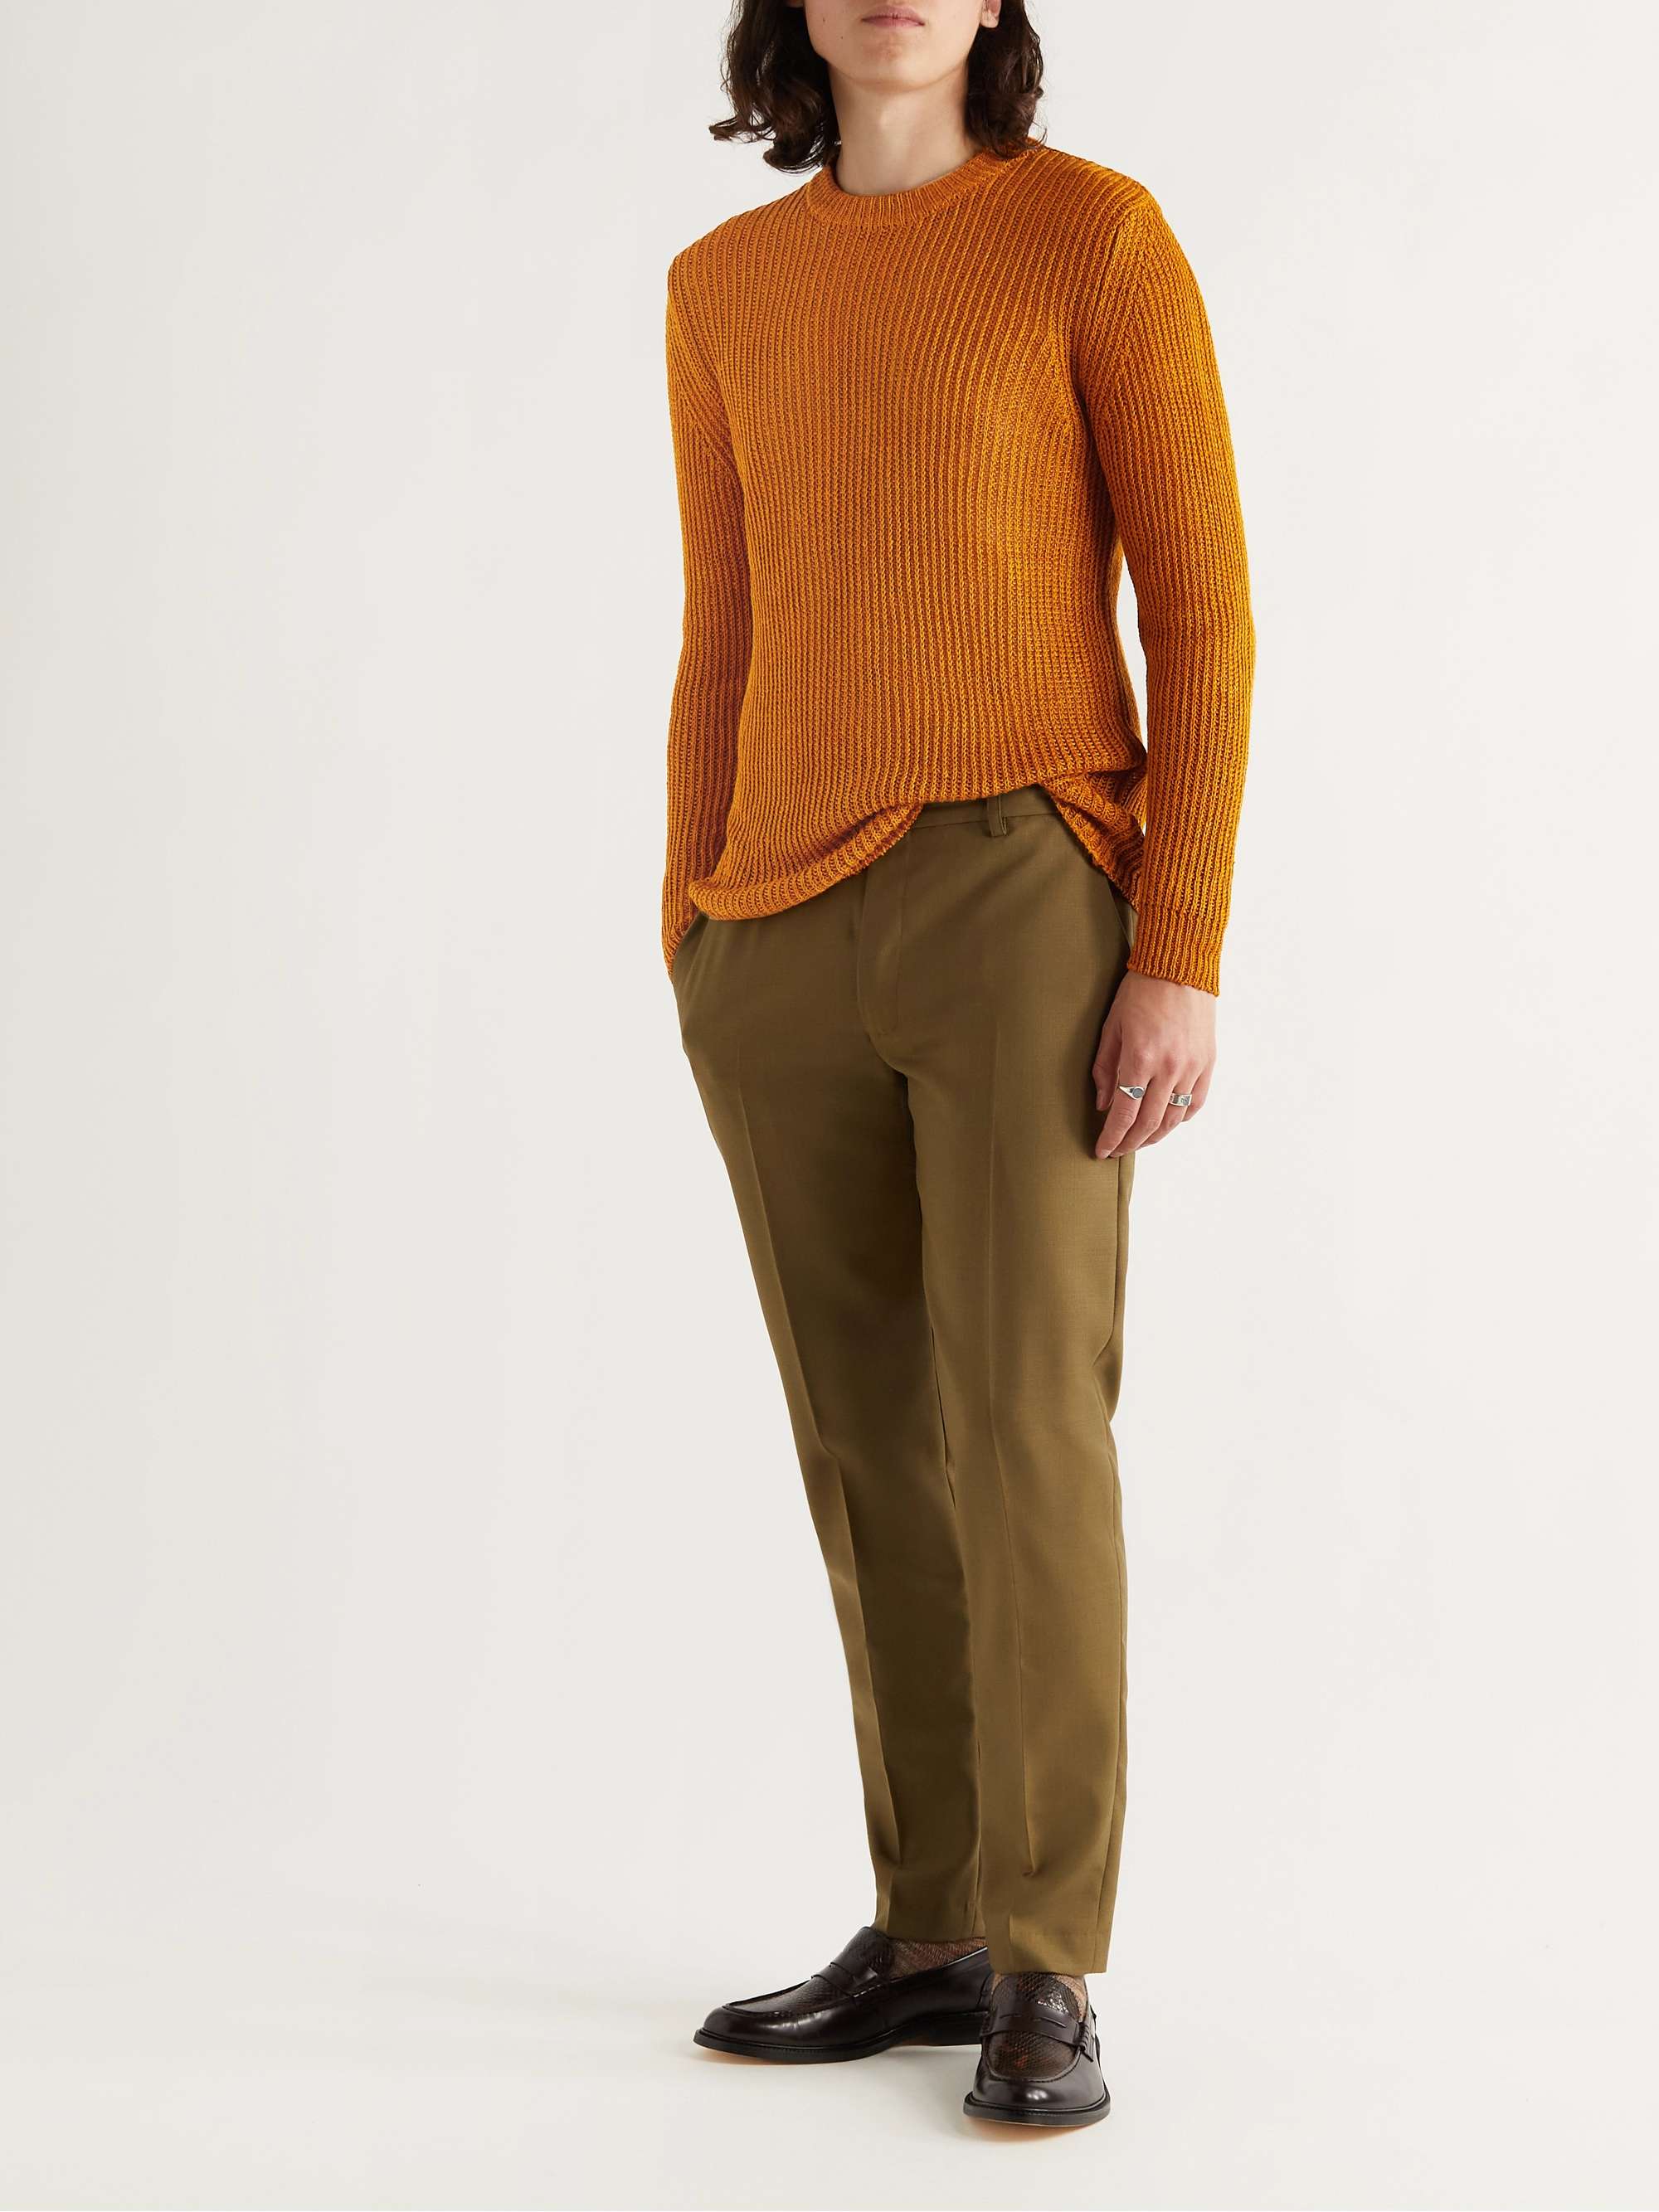 SÉFR Leth Linen-Blend Sweater